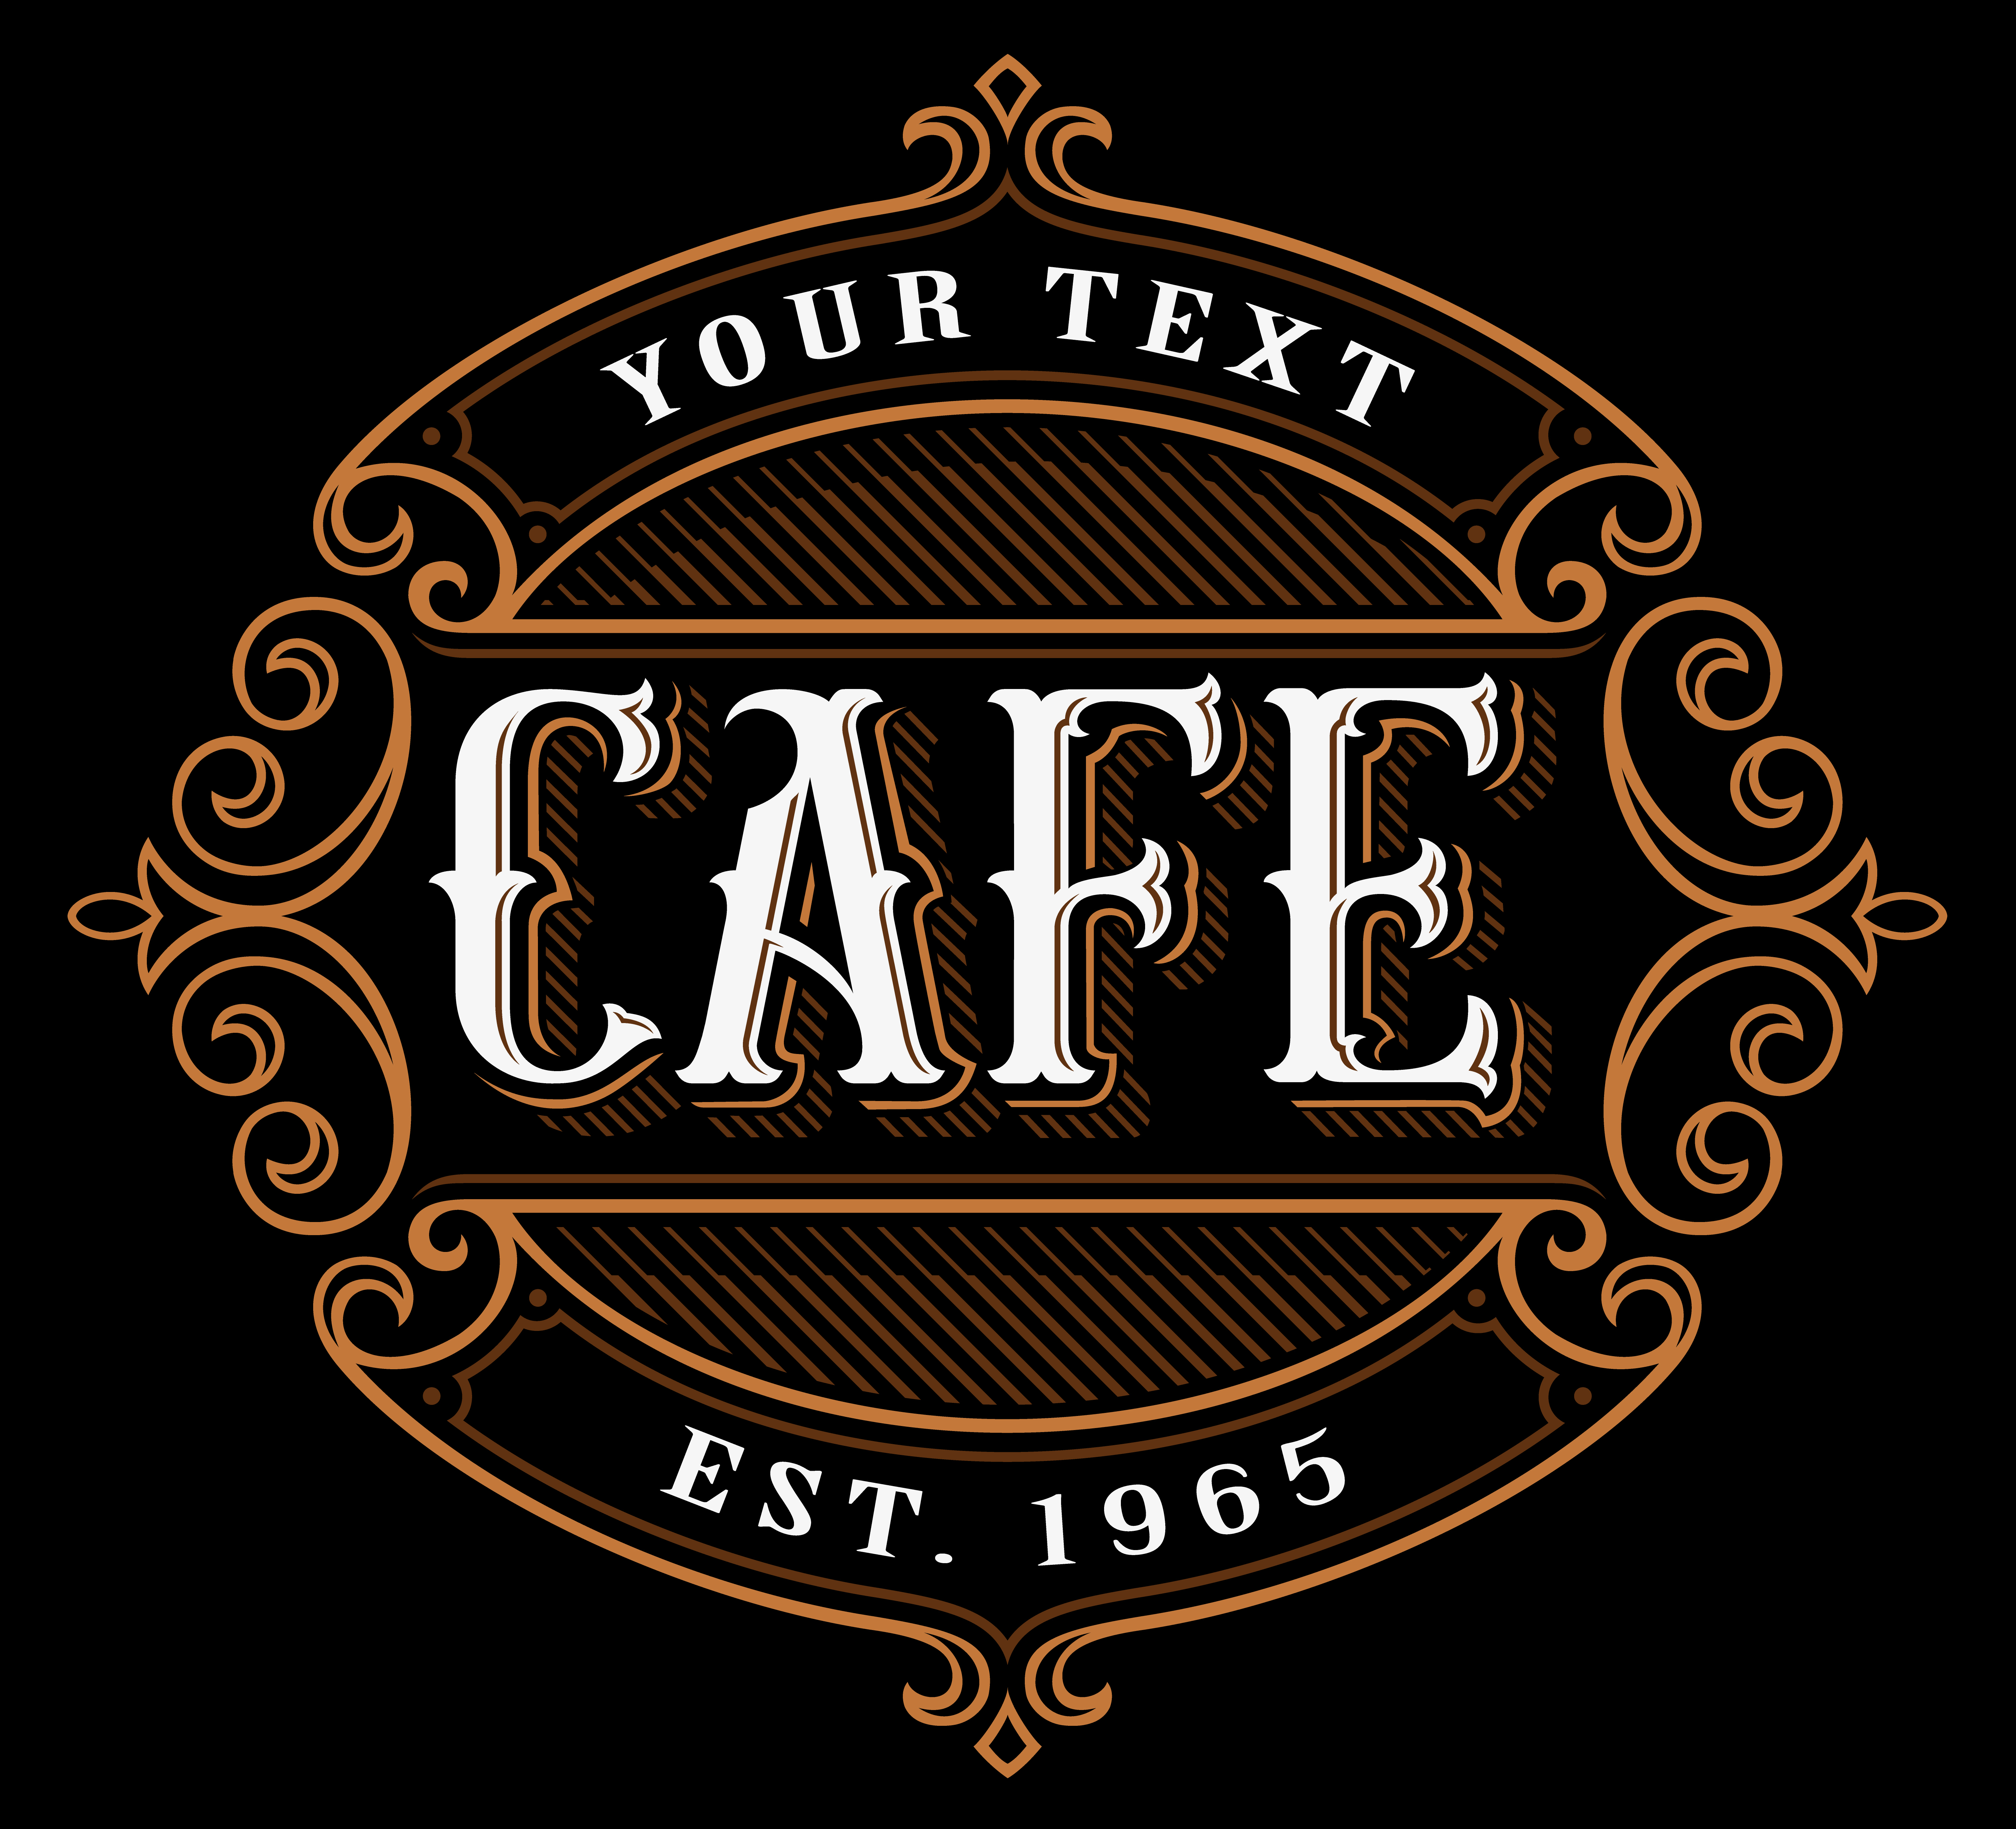 Download Cafe logo design. 539206 - Download Free Vectors, Clipart ...